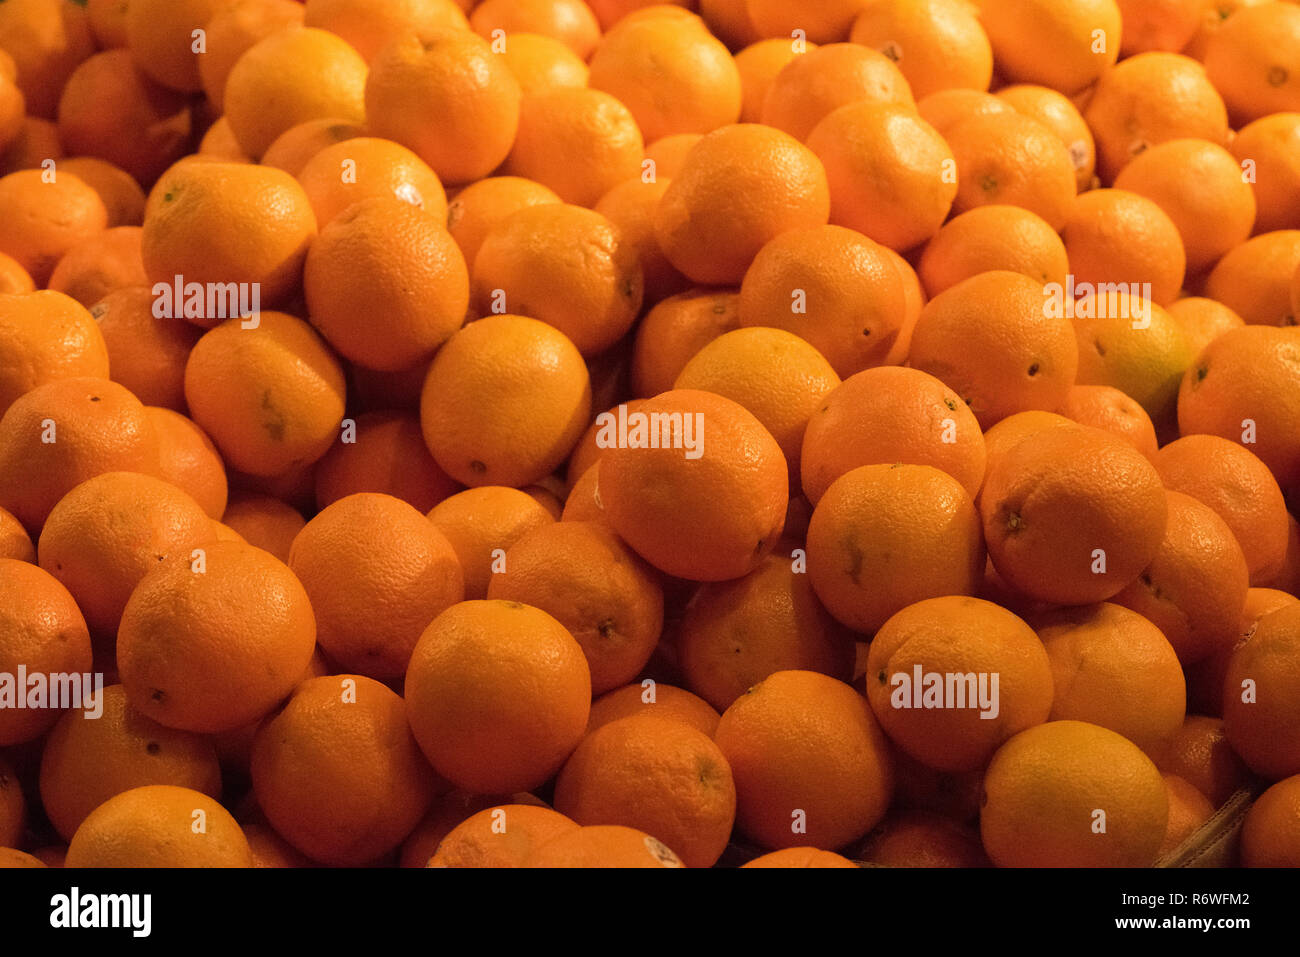 Bulk oranges stored in a bin at an open air market Stock Photo